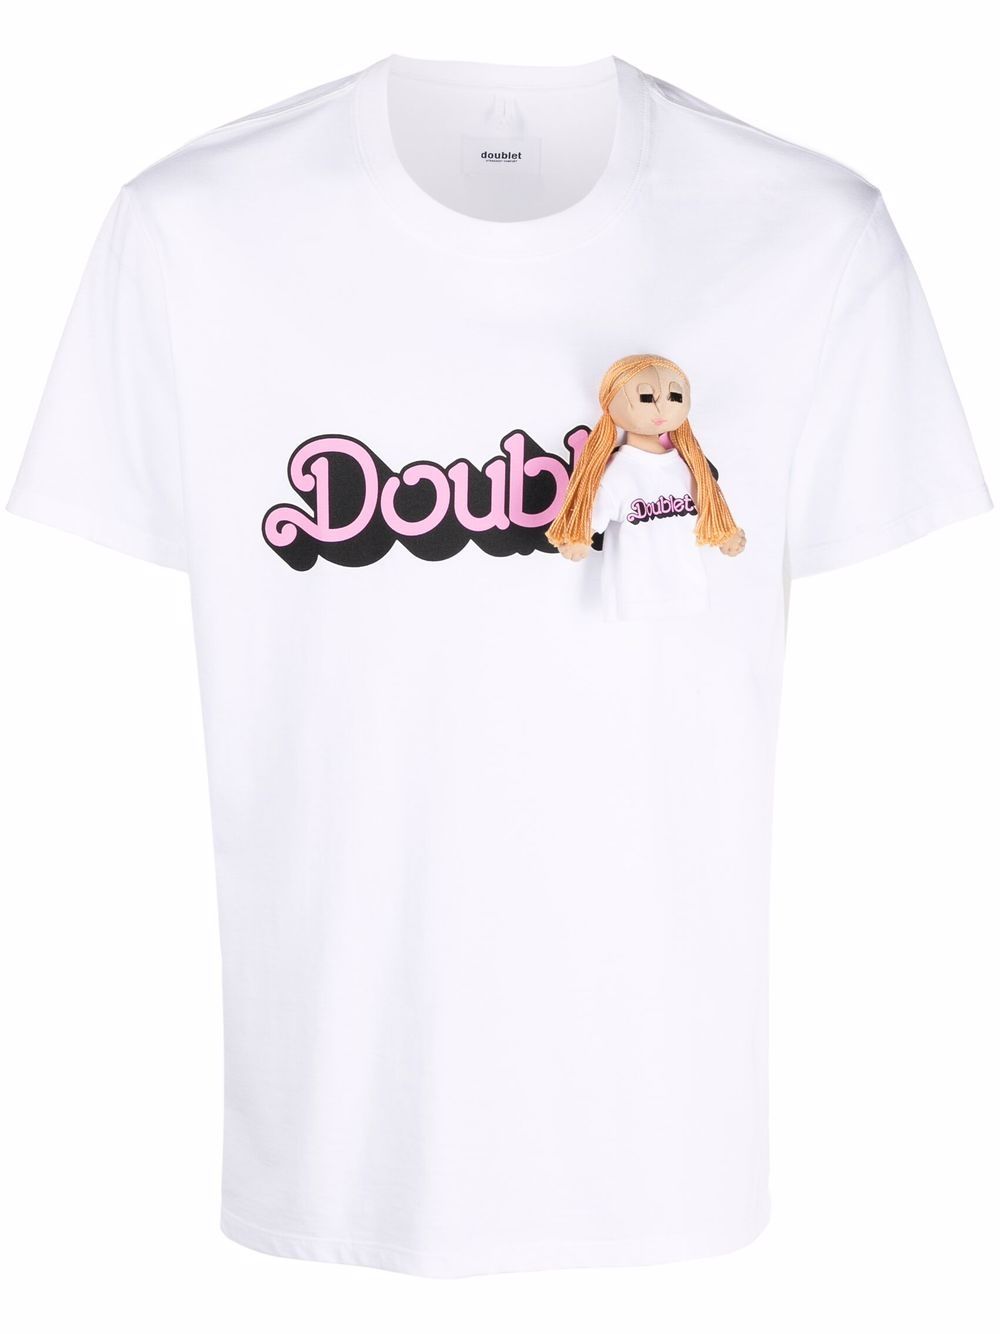 фото Doublet футболка с аппликацией